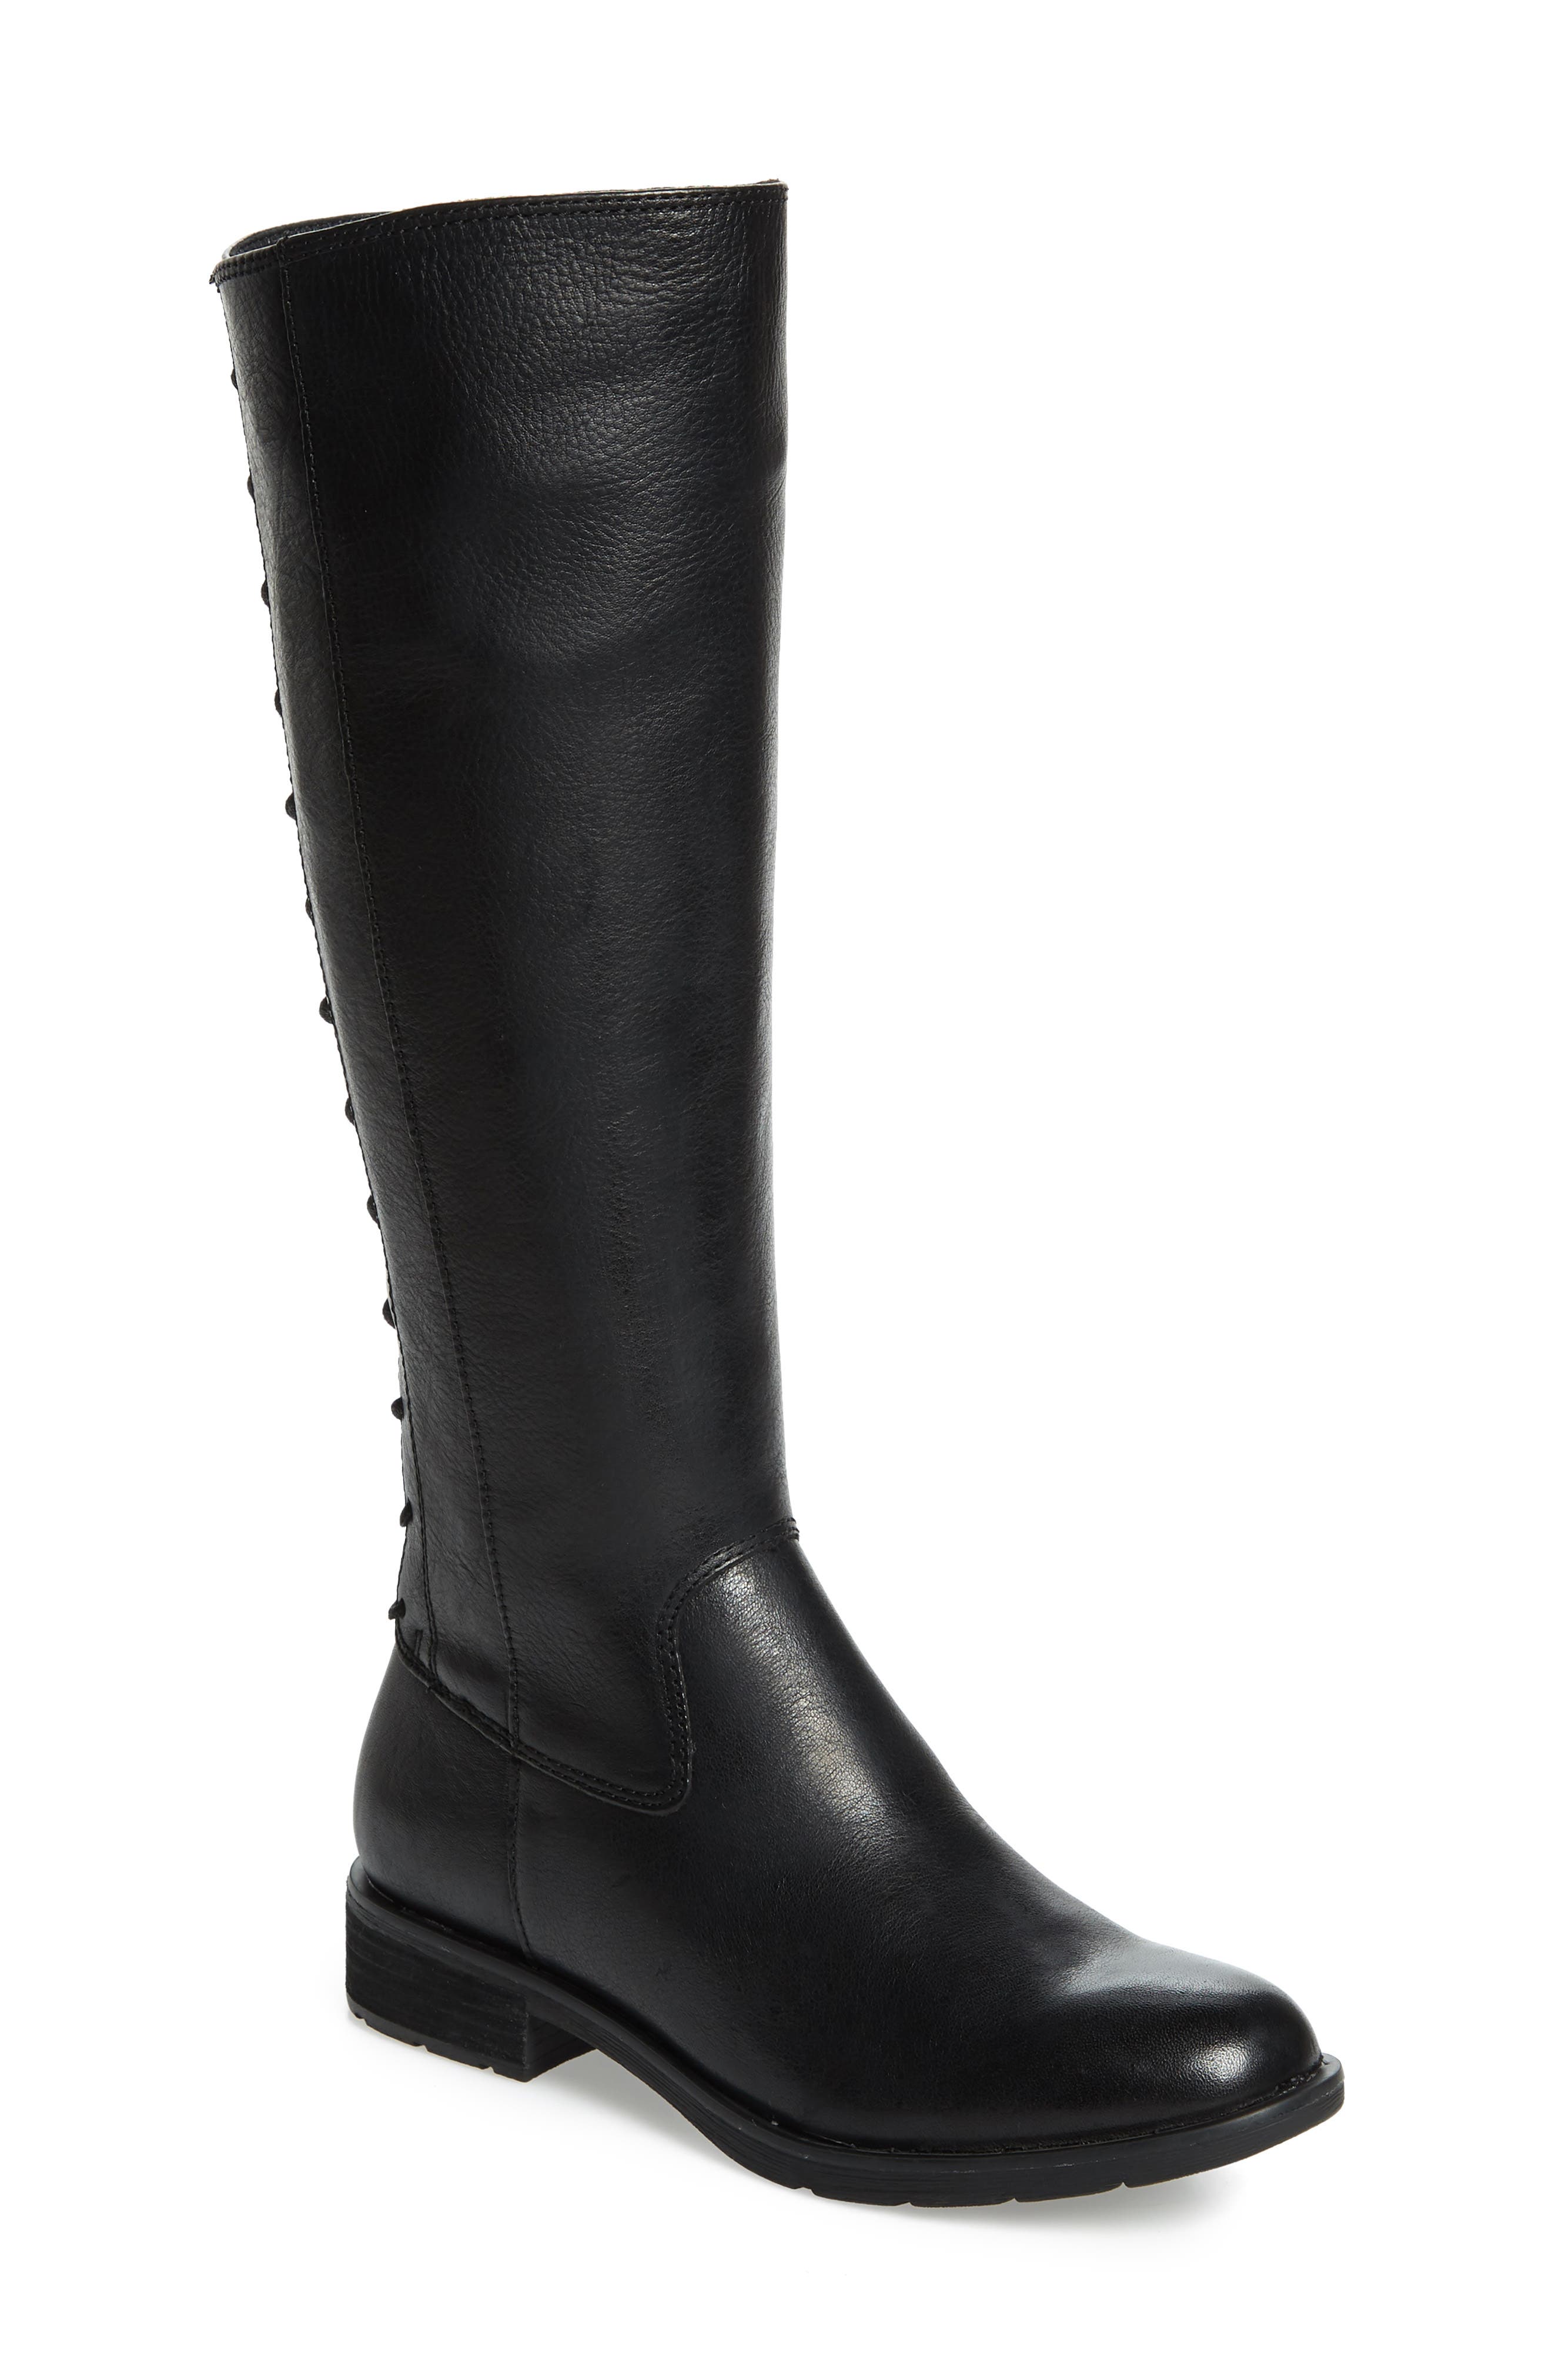 Sharnell II Waterproof Knee High Boot 